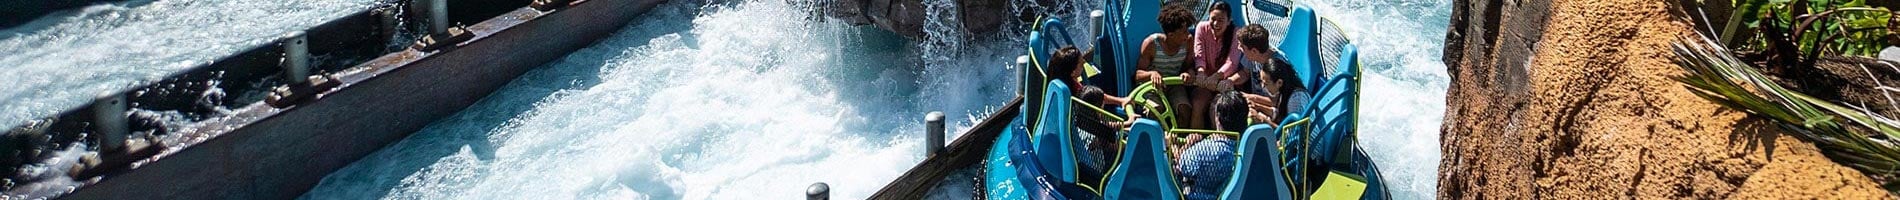 Infinity Falls at SeaWorld Orlando